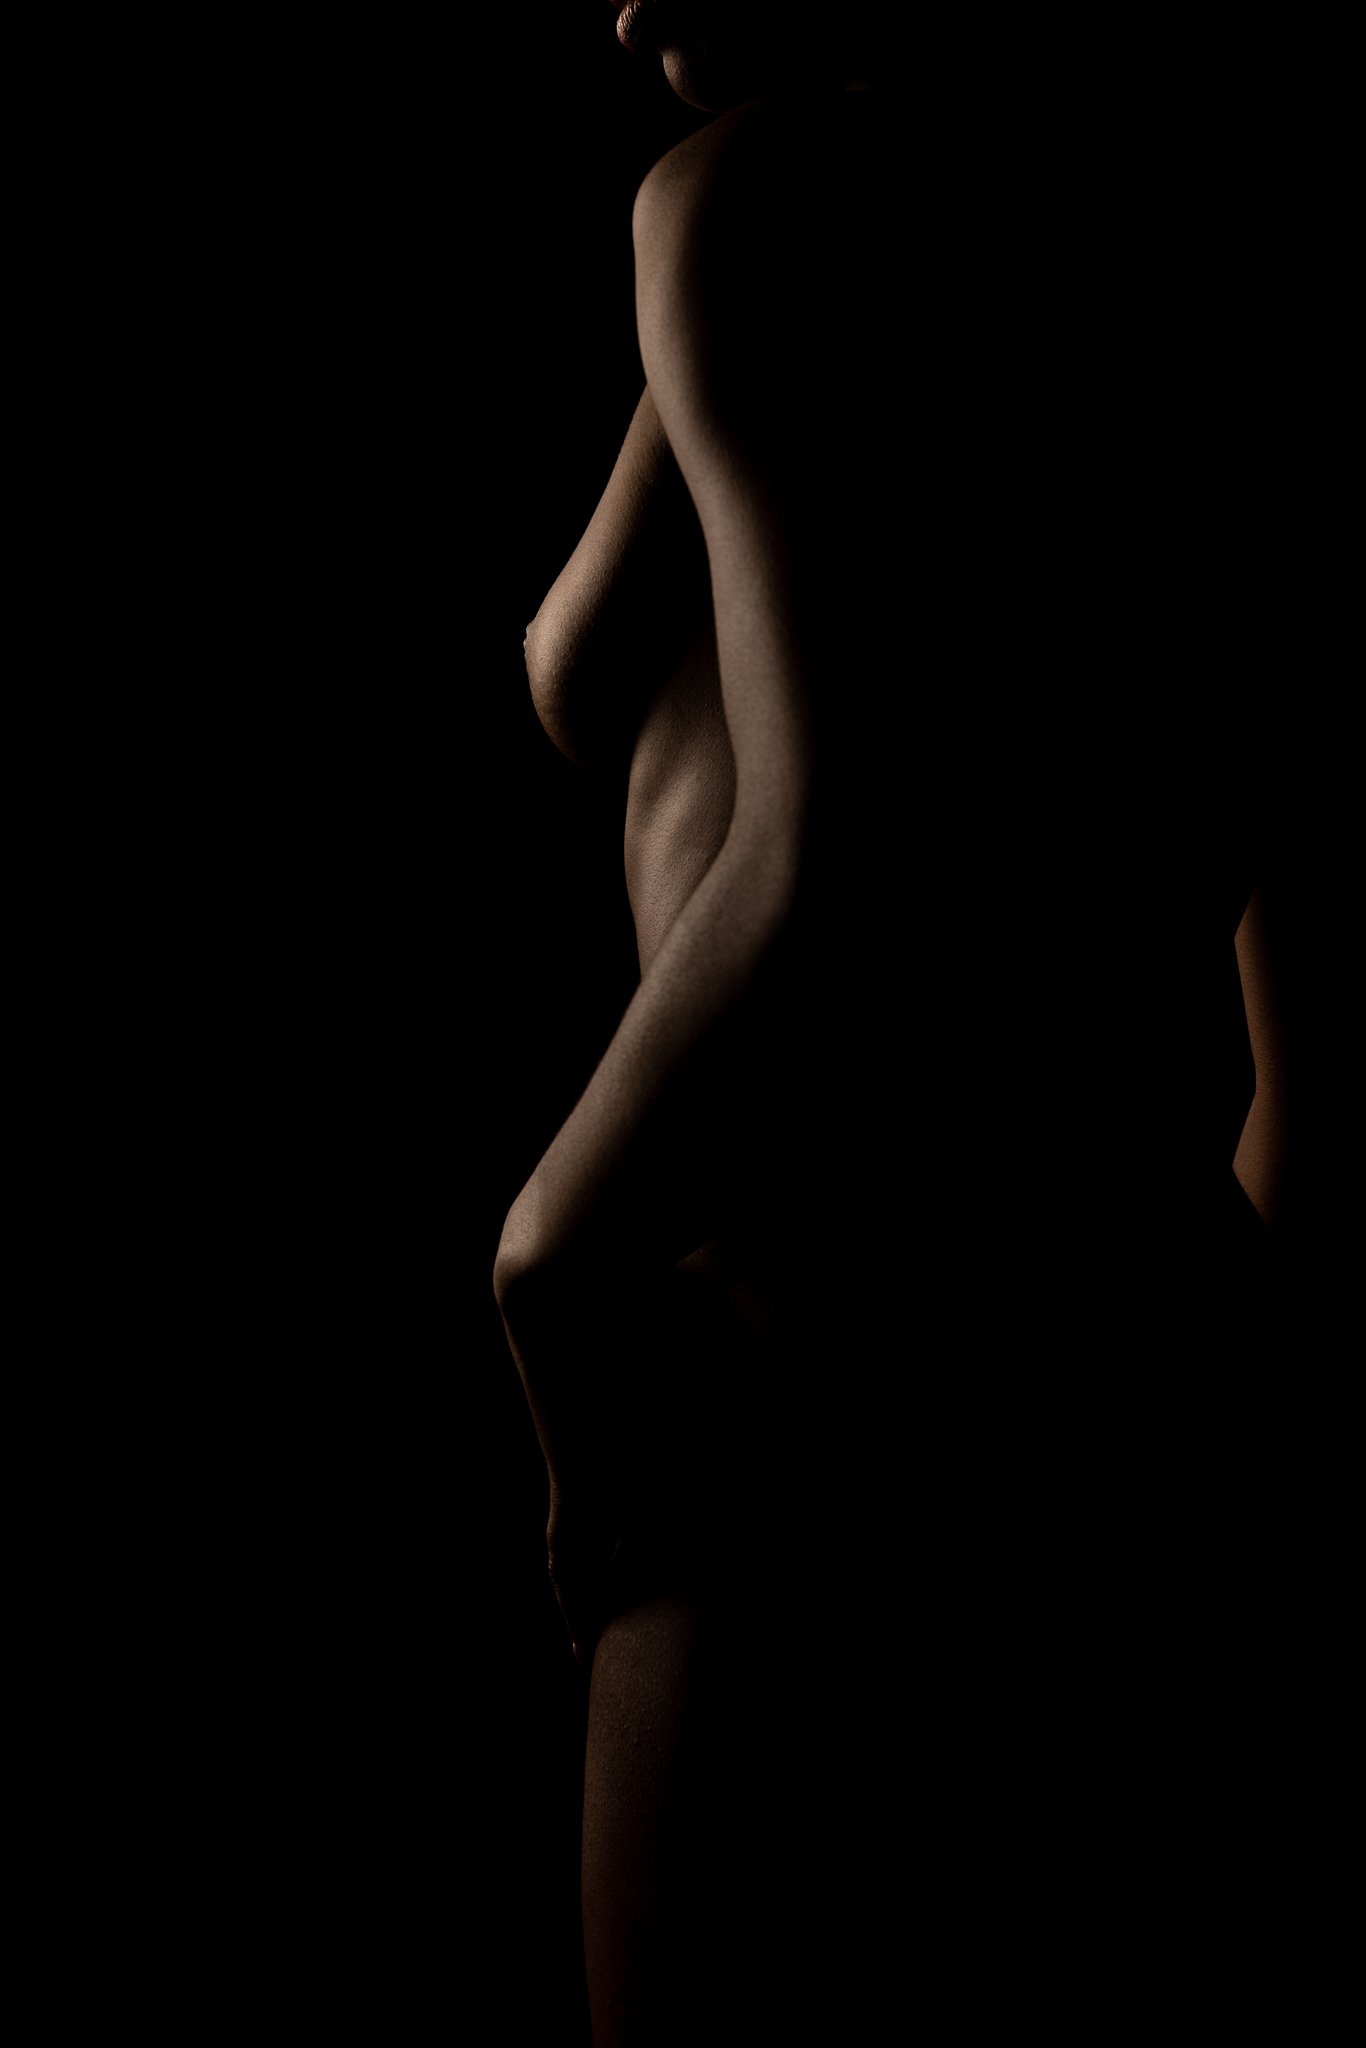 Artistic nude silhouette